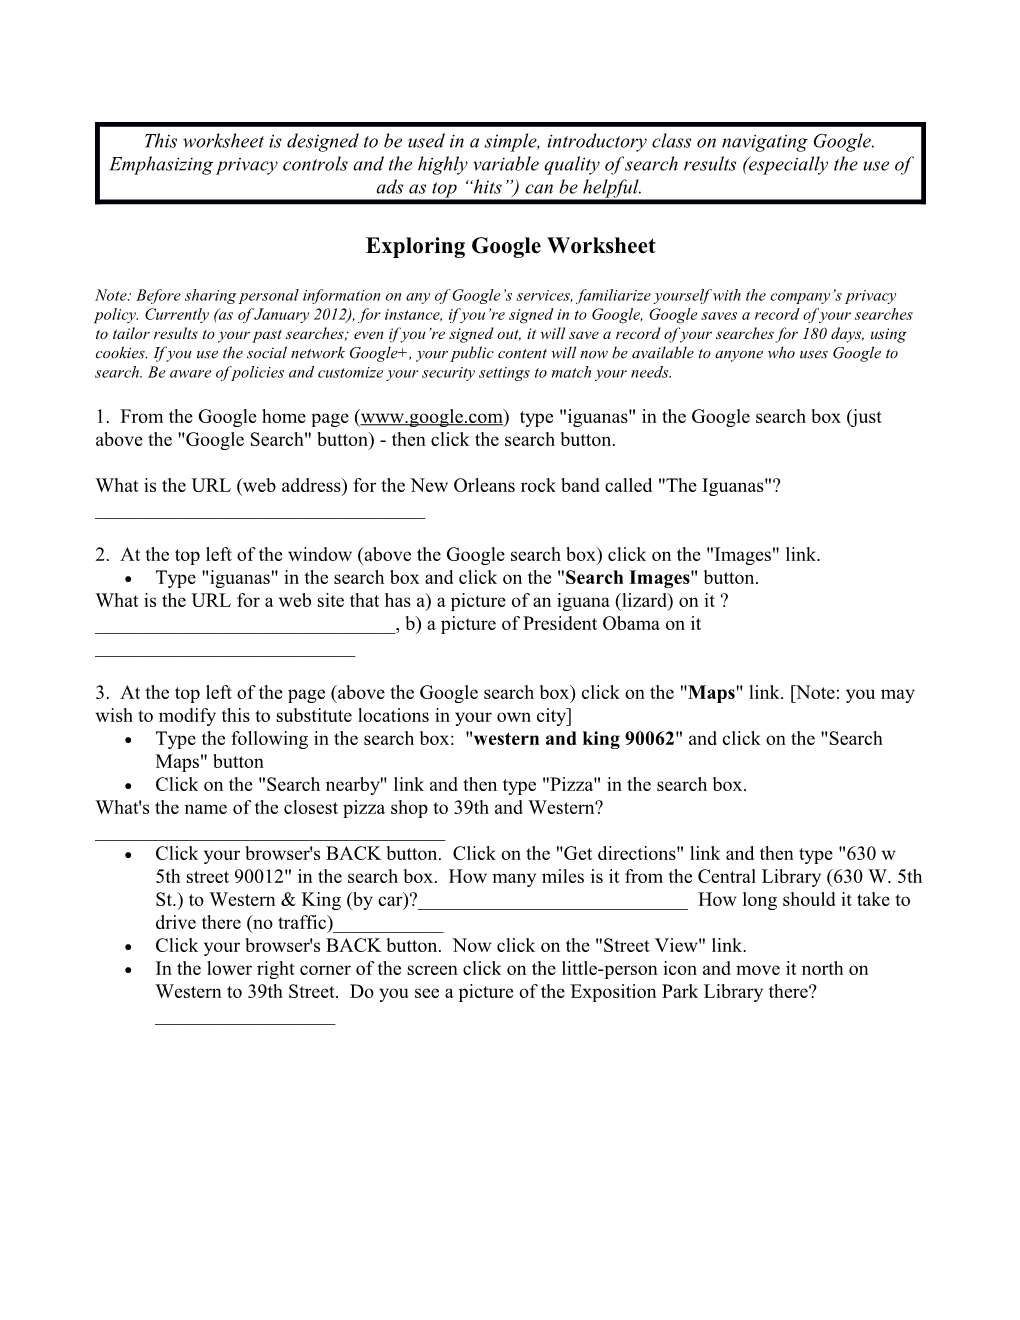 Exploring Google Worksheet